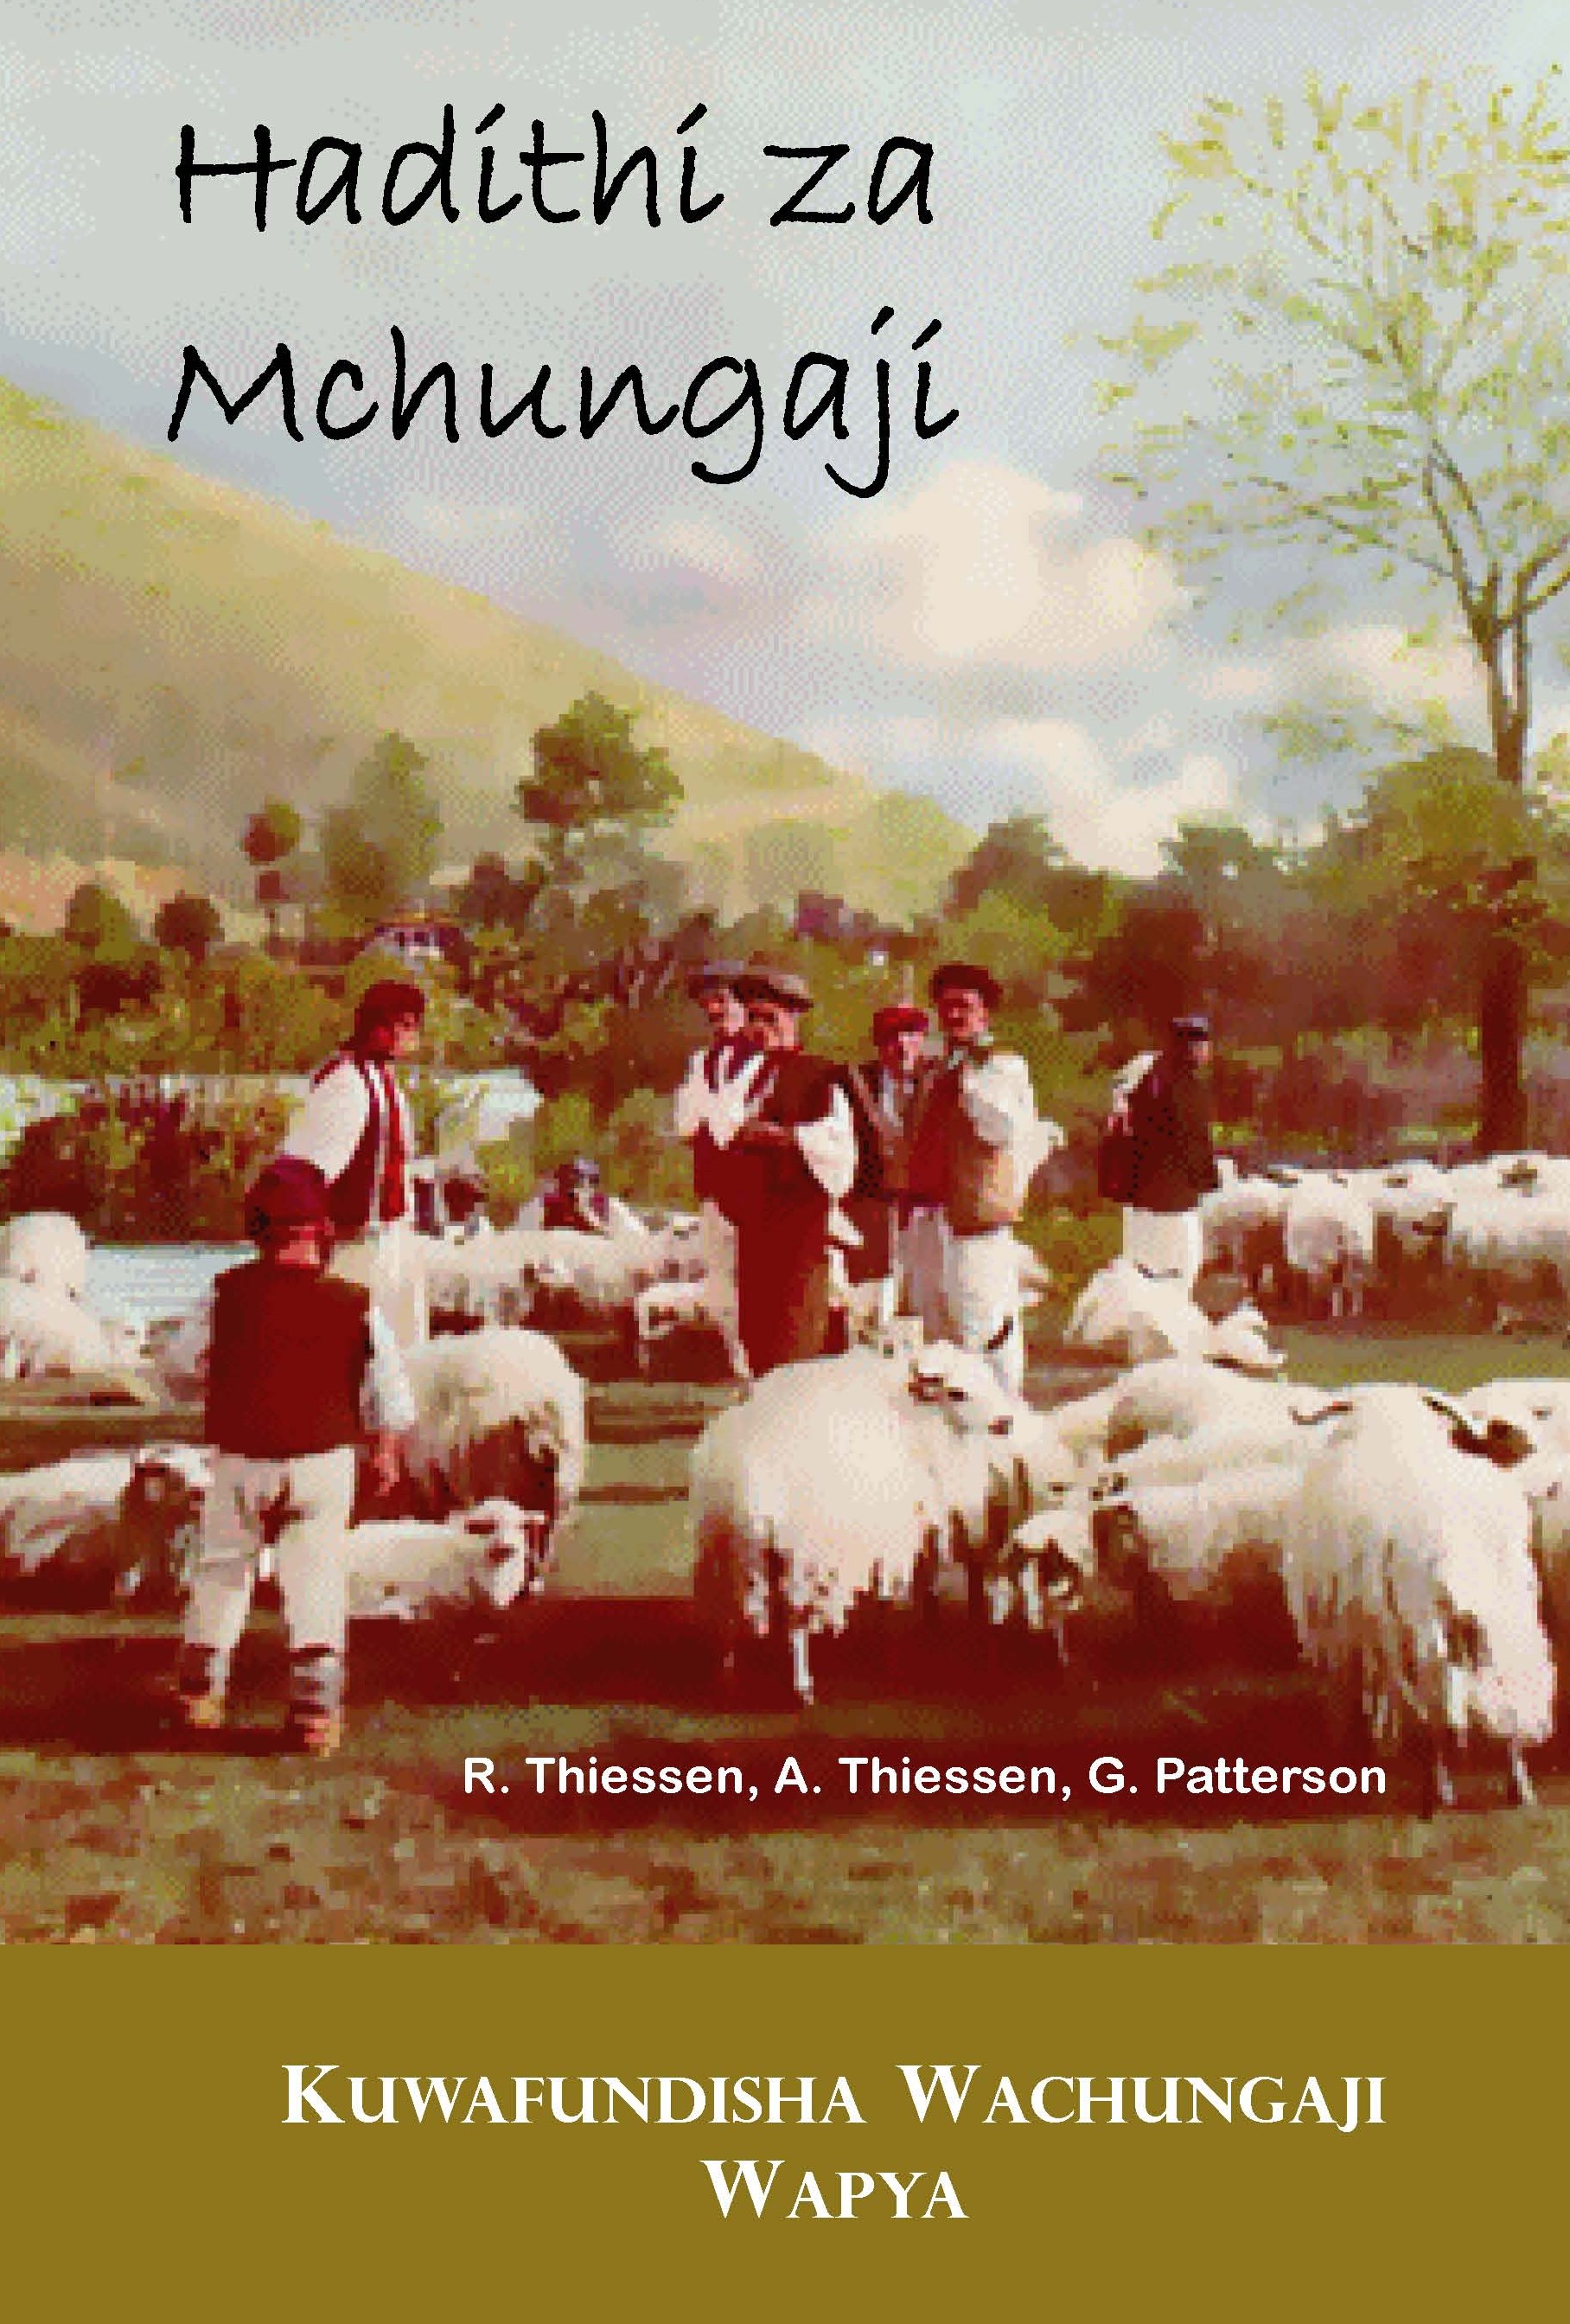 Shepherds Storybook Swahili